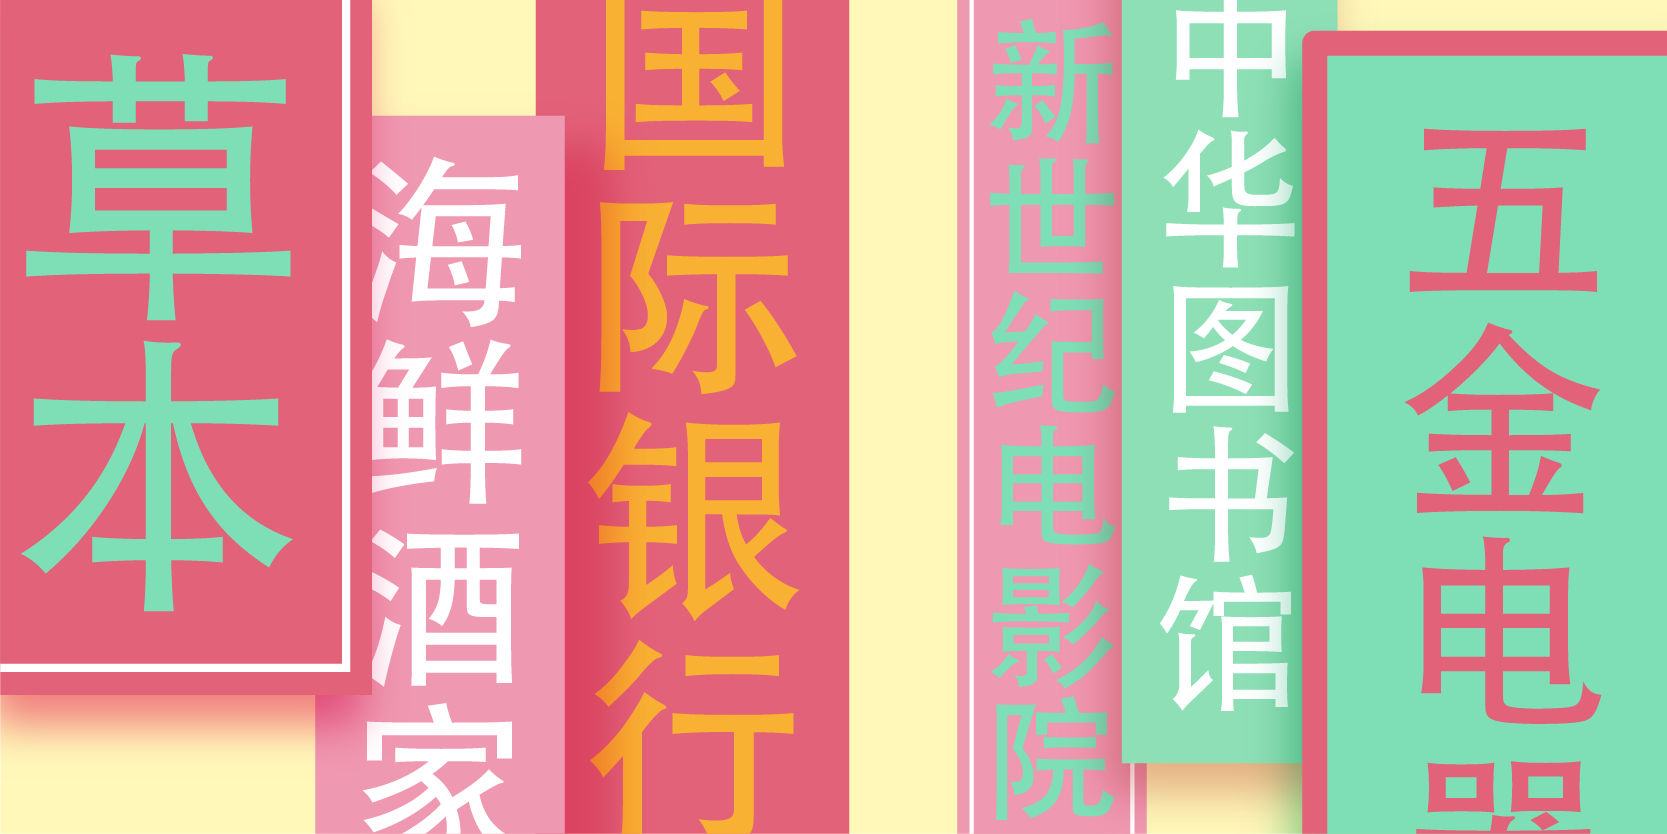 Card displaying Adobe Heiti typeface in various styles